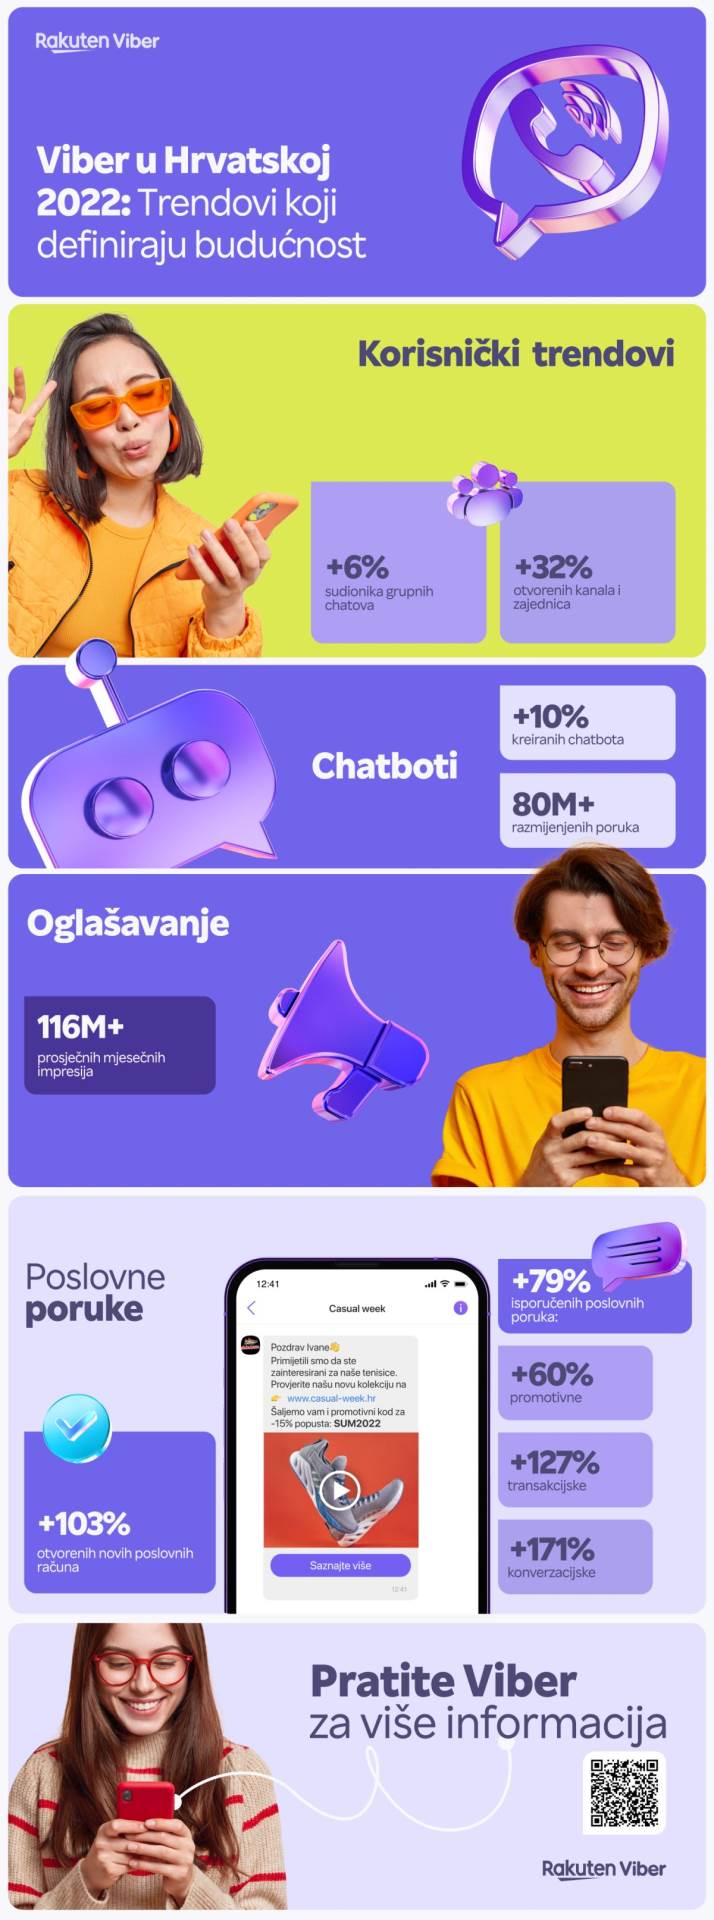  Viber in Croatia 2022_ Trends defining  the future.jpg 